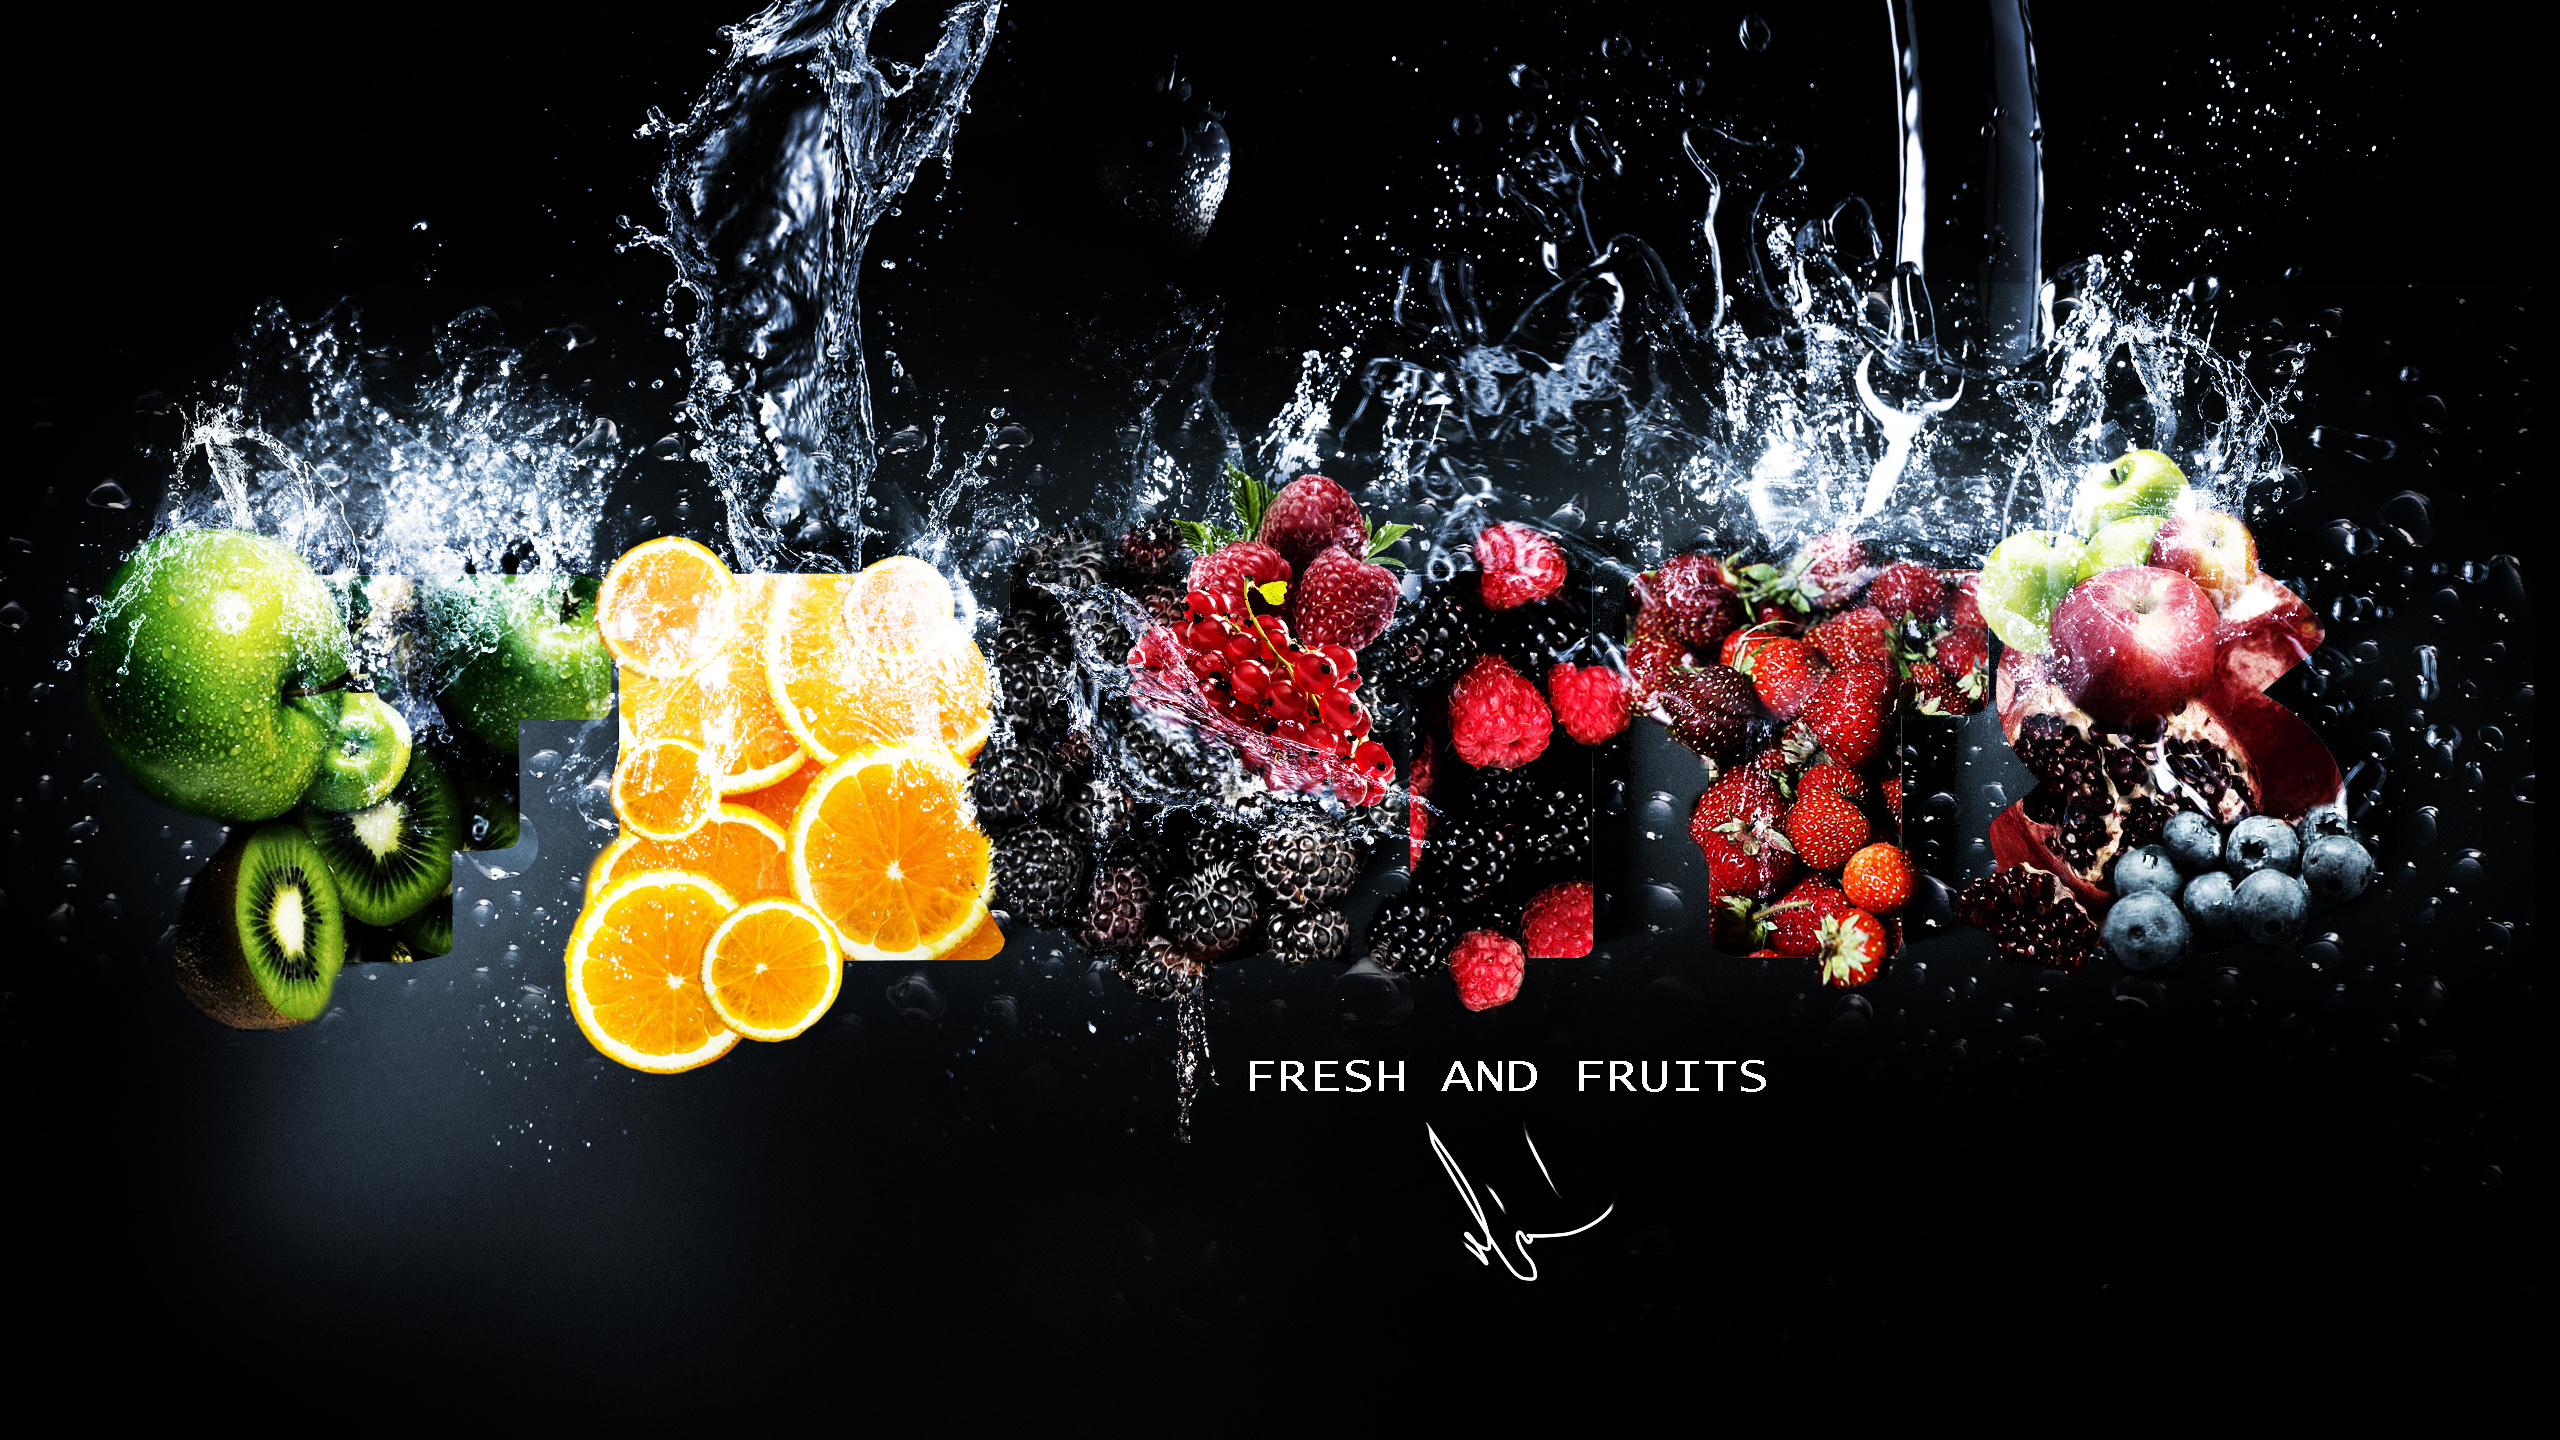 papel pintado de frutas,fruta,planta,comida,fotografía de naturaleza muerta,naranja